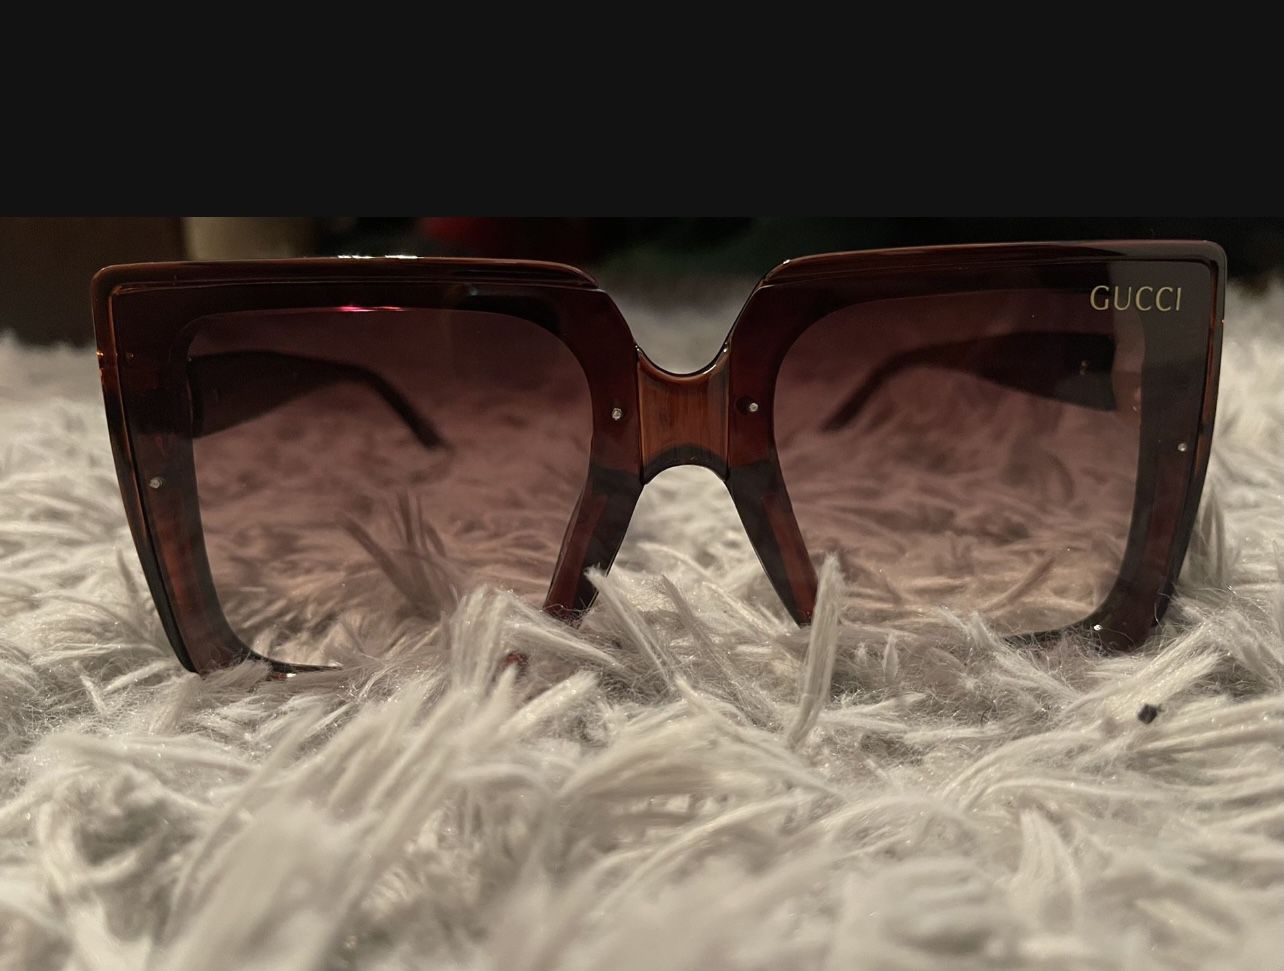 GG Sunglasses $50